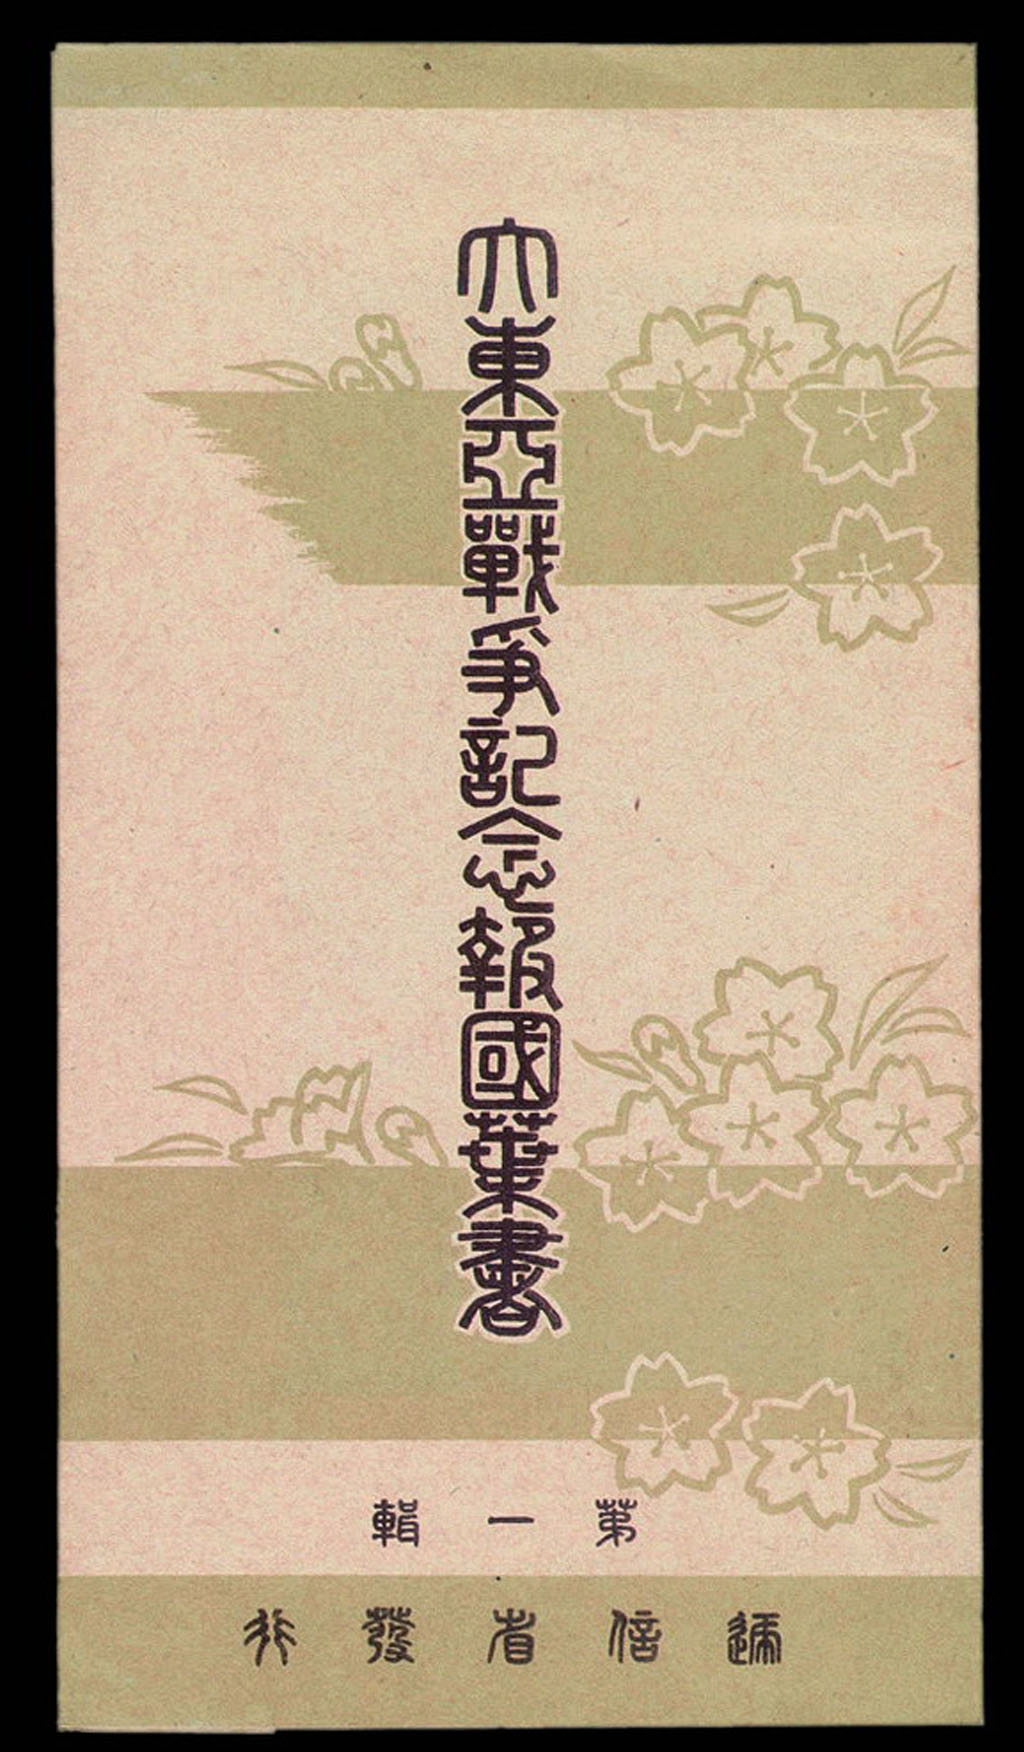 PS 日本印制《大东亚战争纪念报国叶书》邮资明信片第一辑三枚全